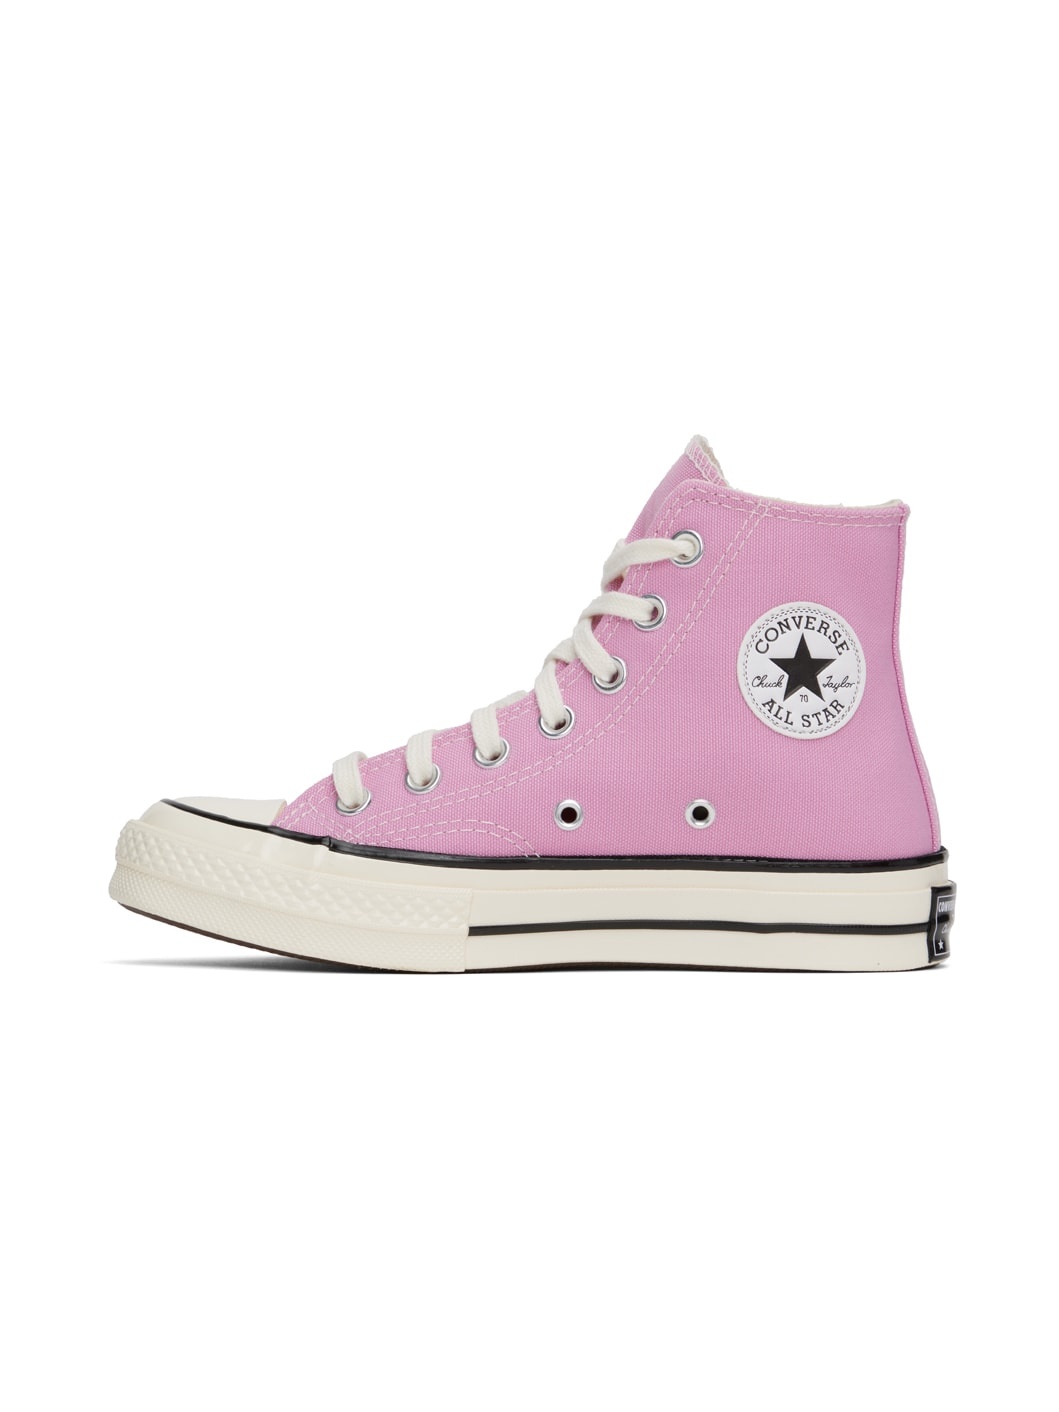 Pink Chuck 70 Seasonal Color Sneakers - 3